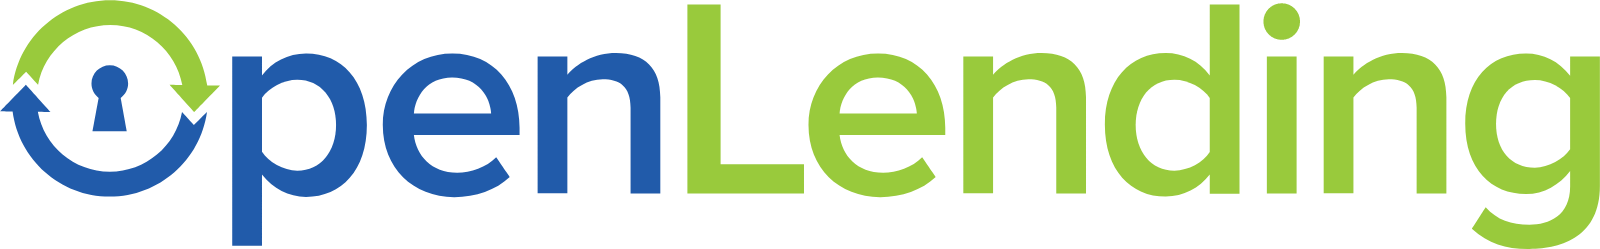 Open Lending logo large (transparent PNG)